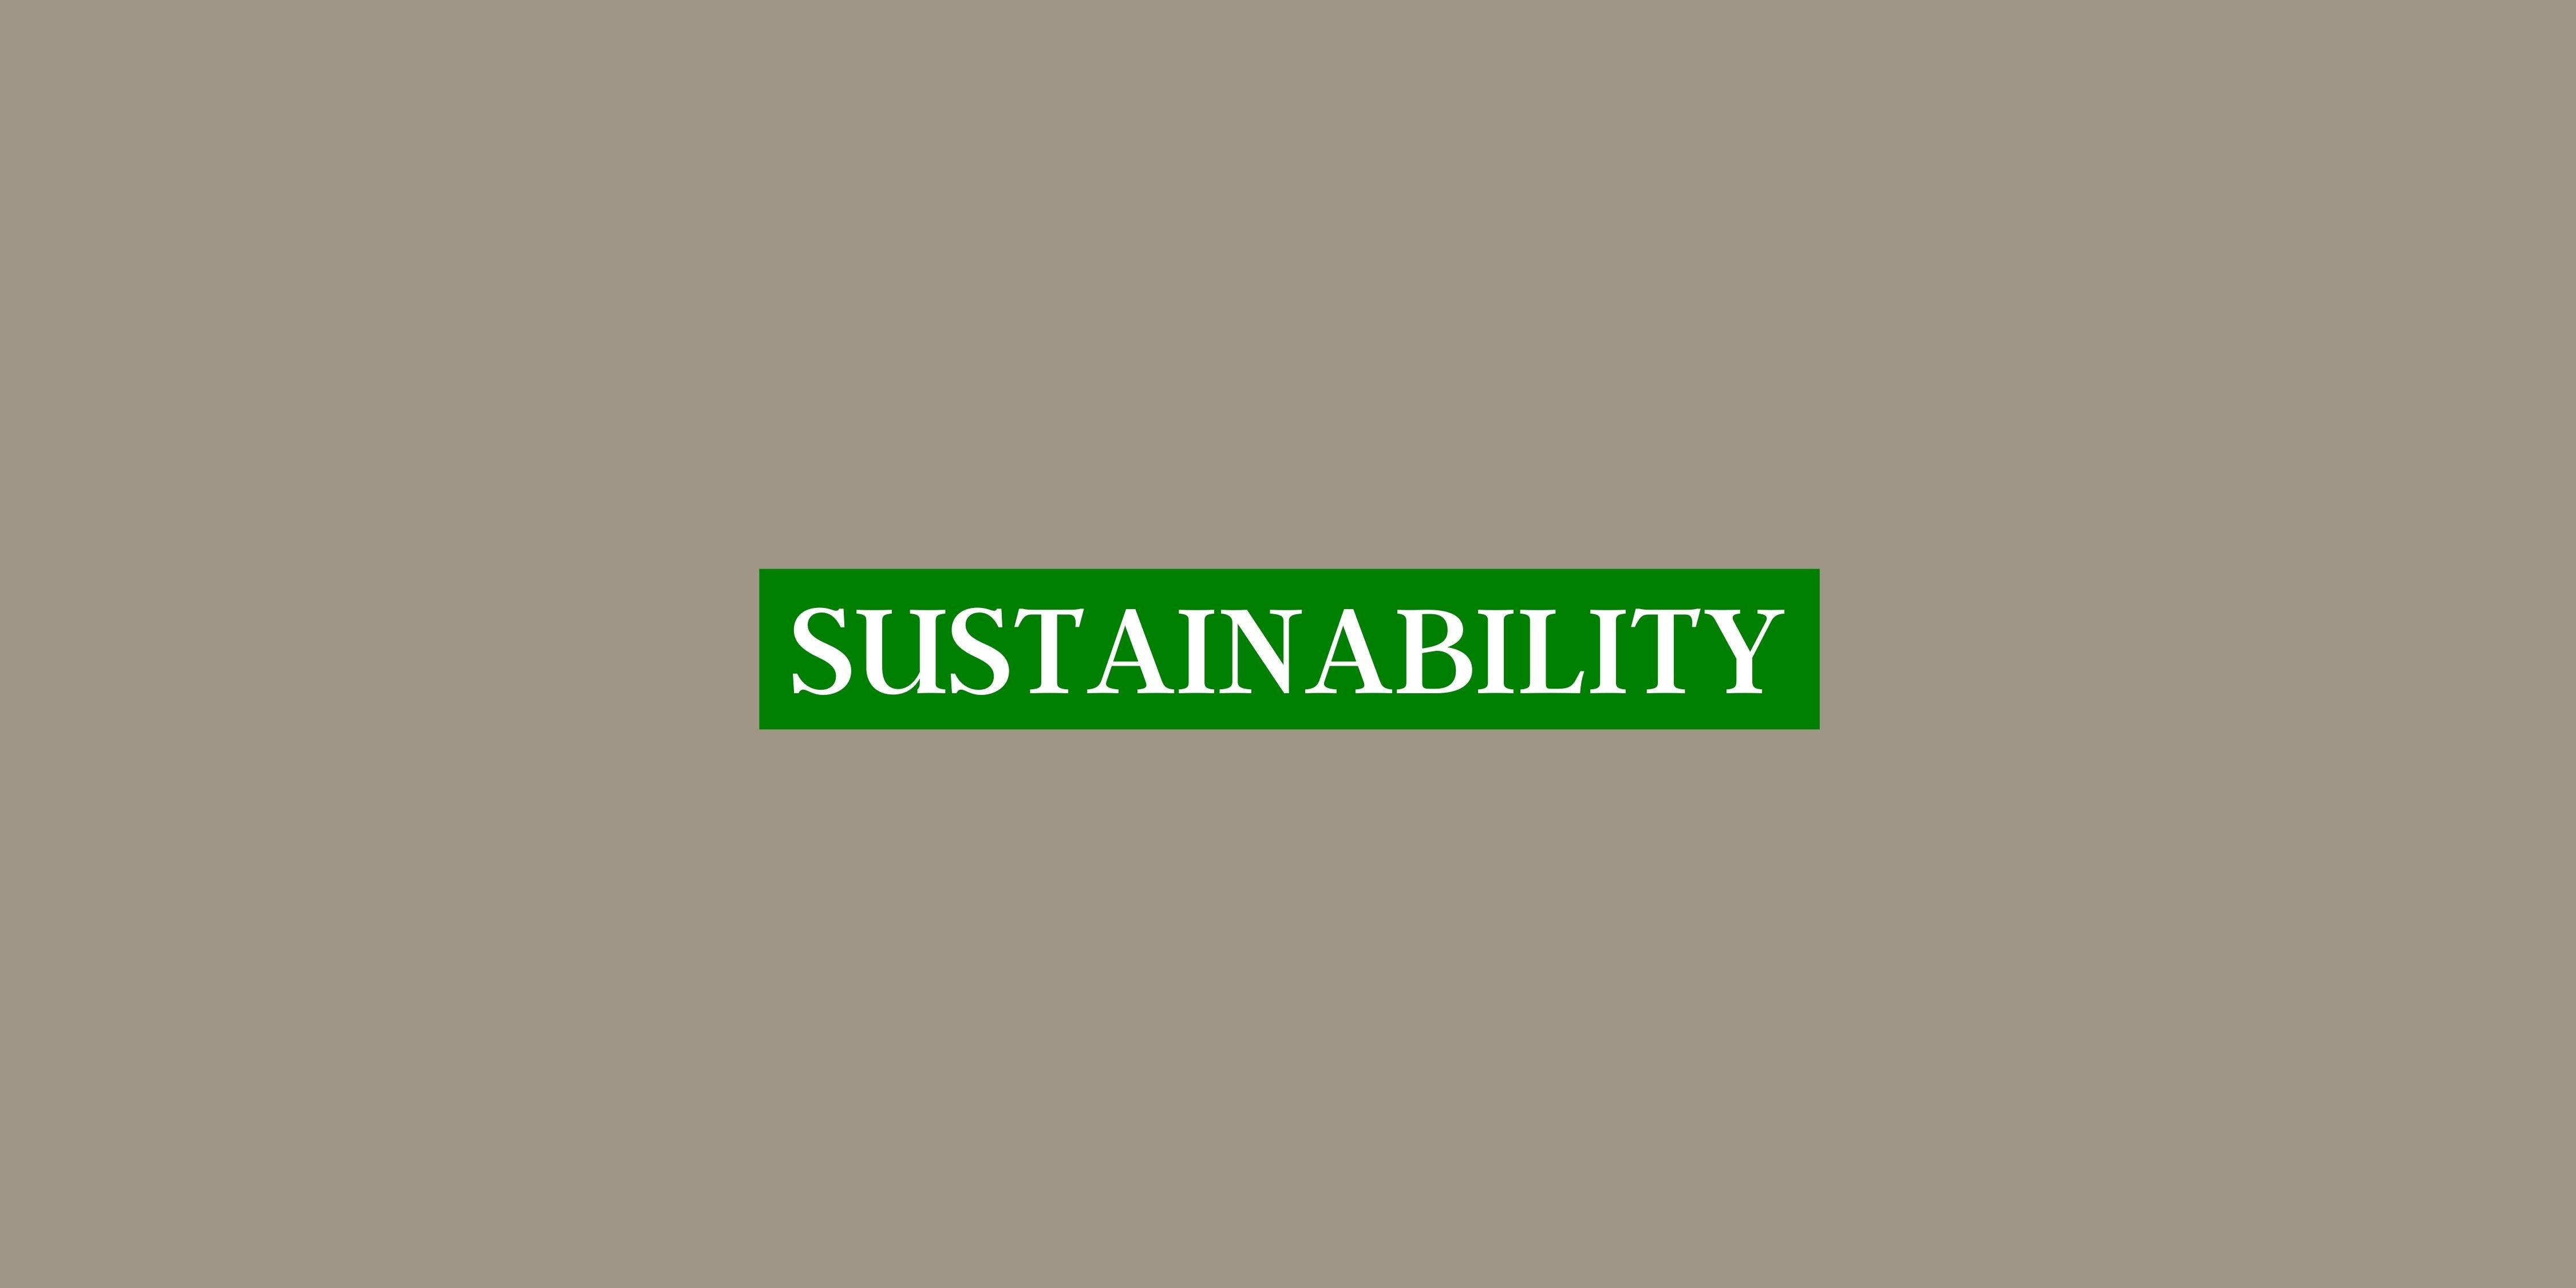 5 ways we are sustainable